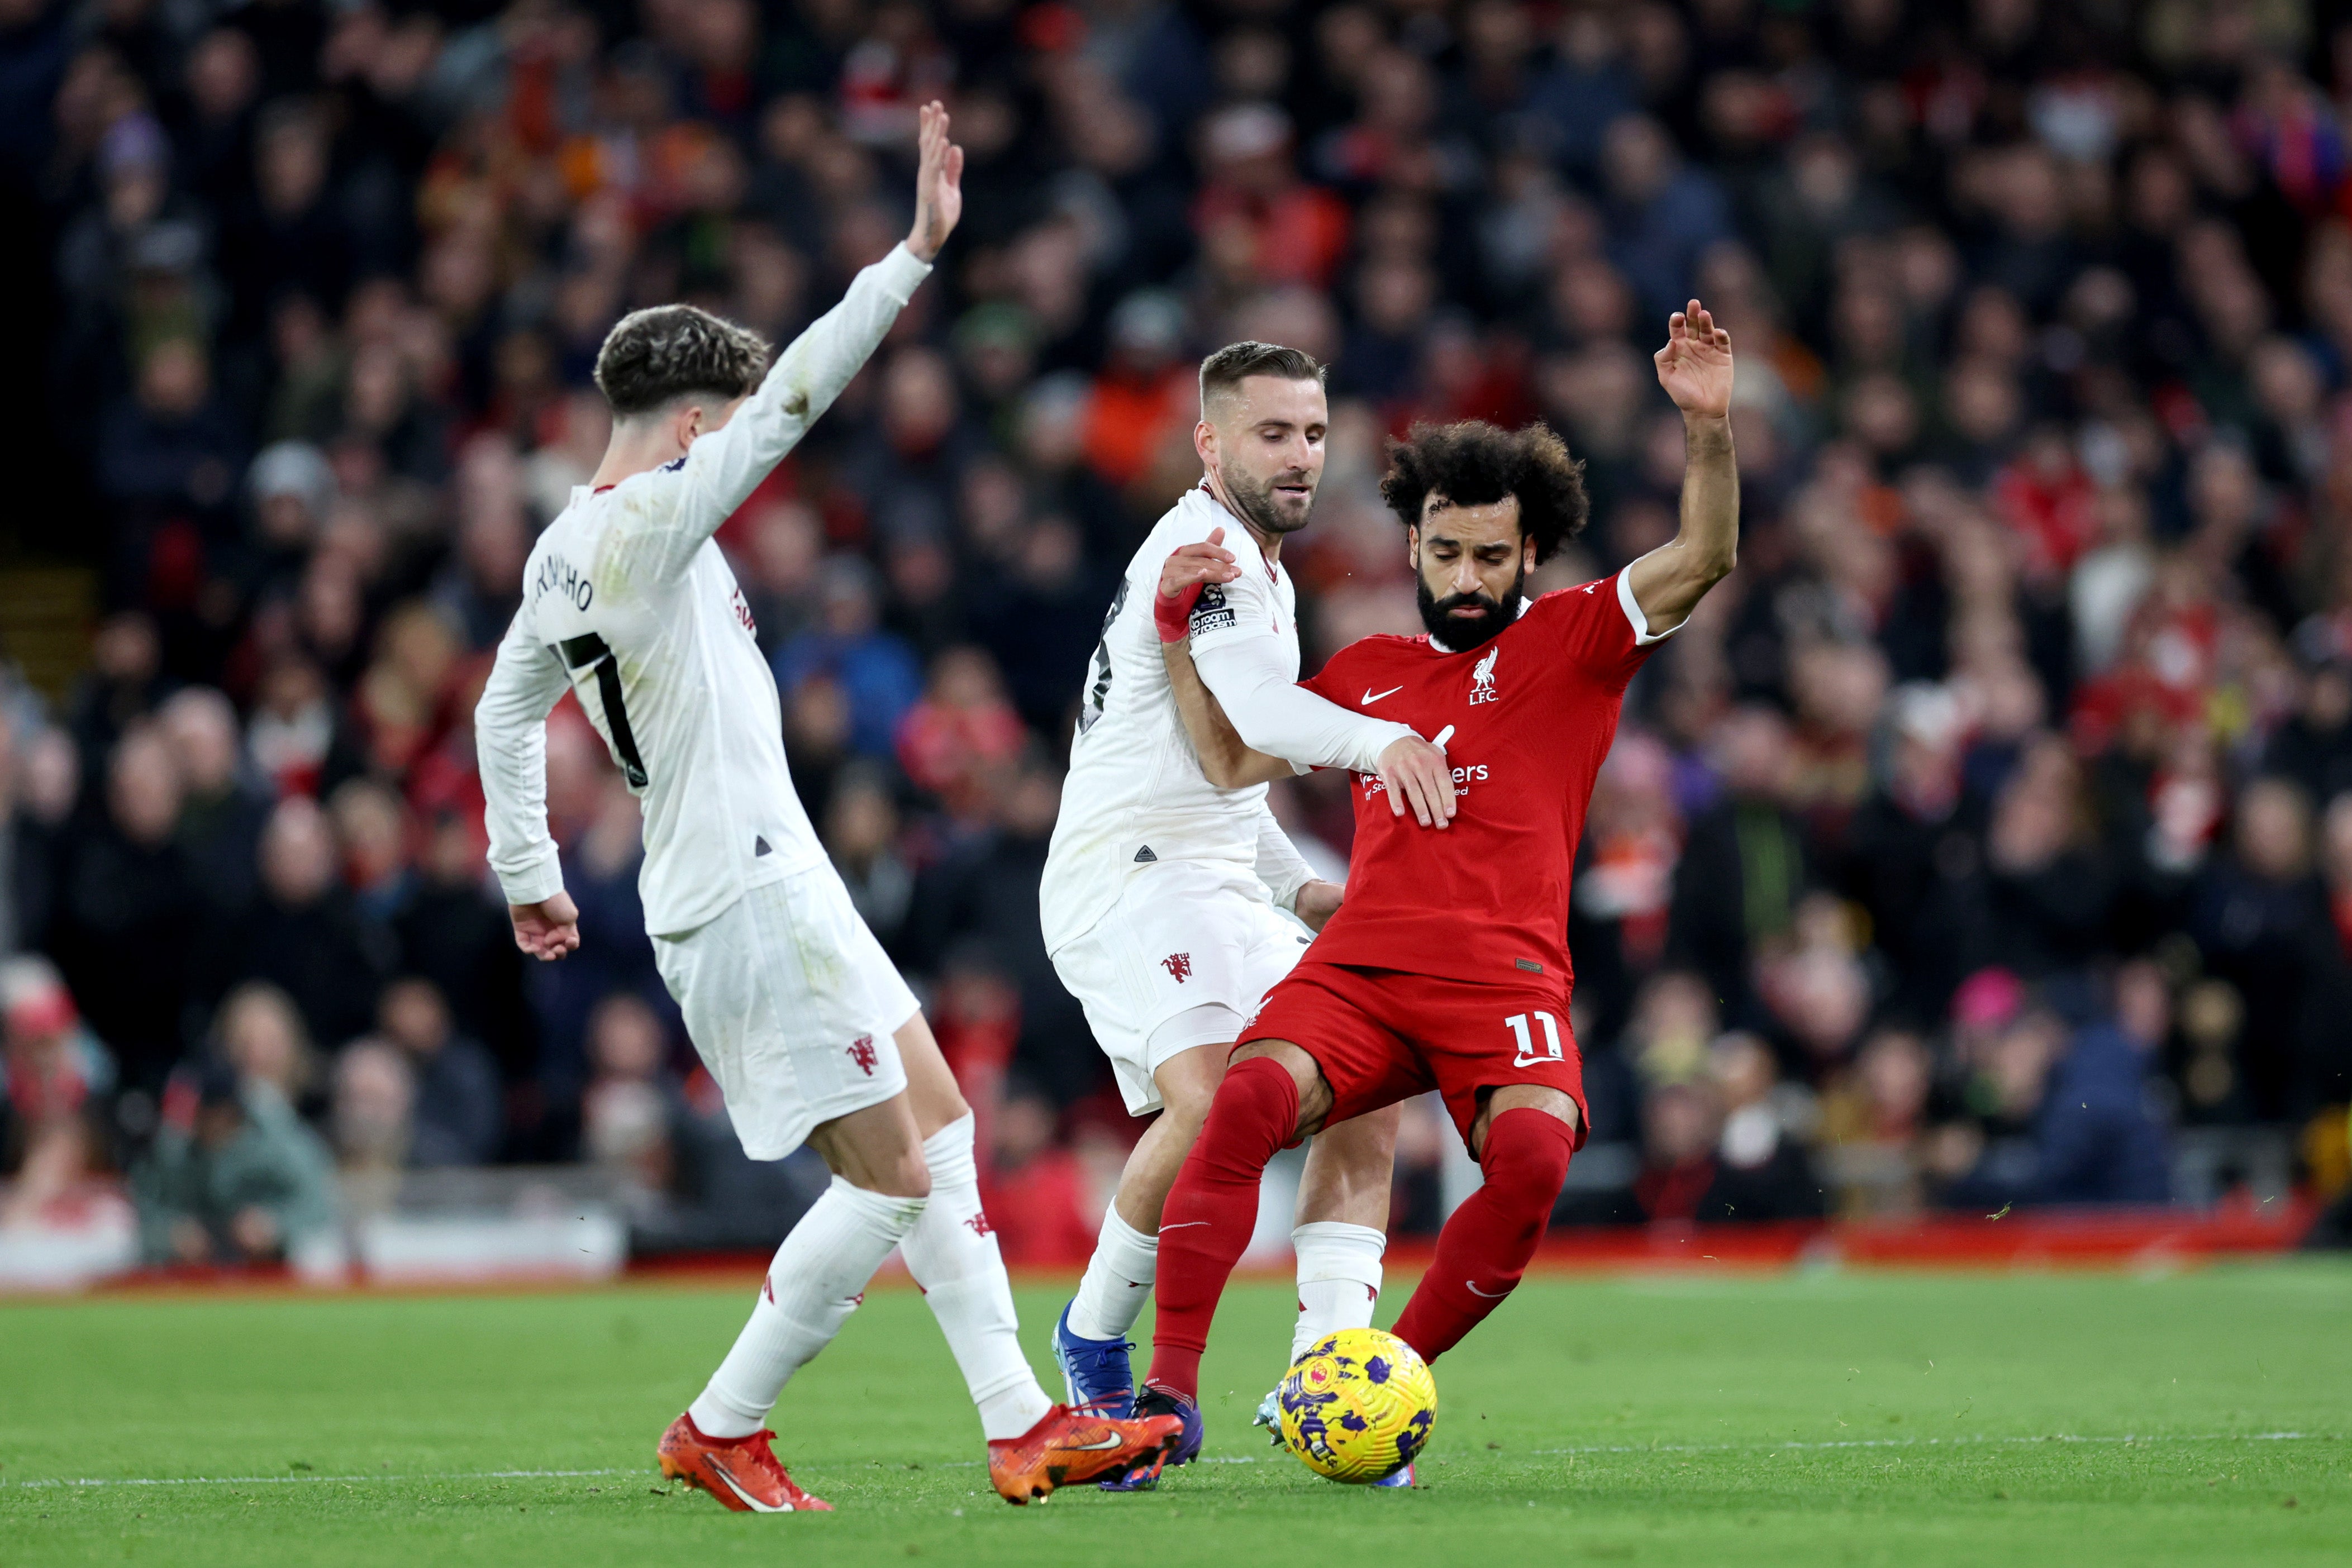 Even Liverpool’s star forward Mohamed Salah struggled